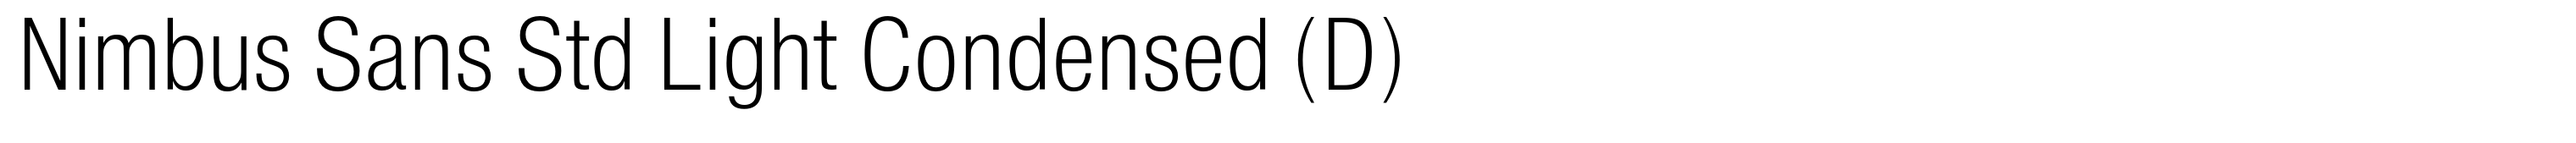 Nimbus Sans Std Light Condensed (D)